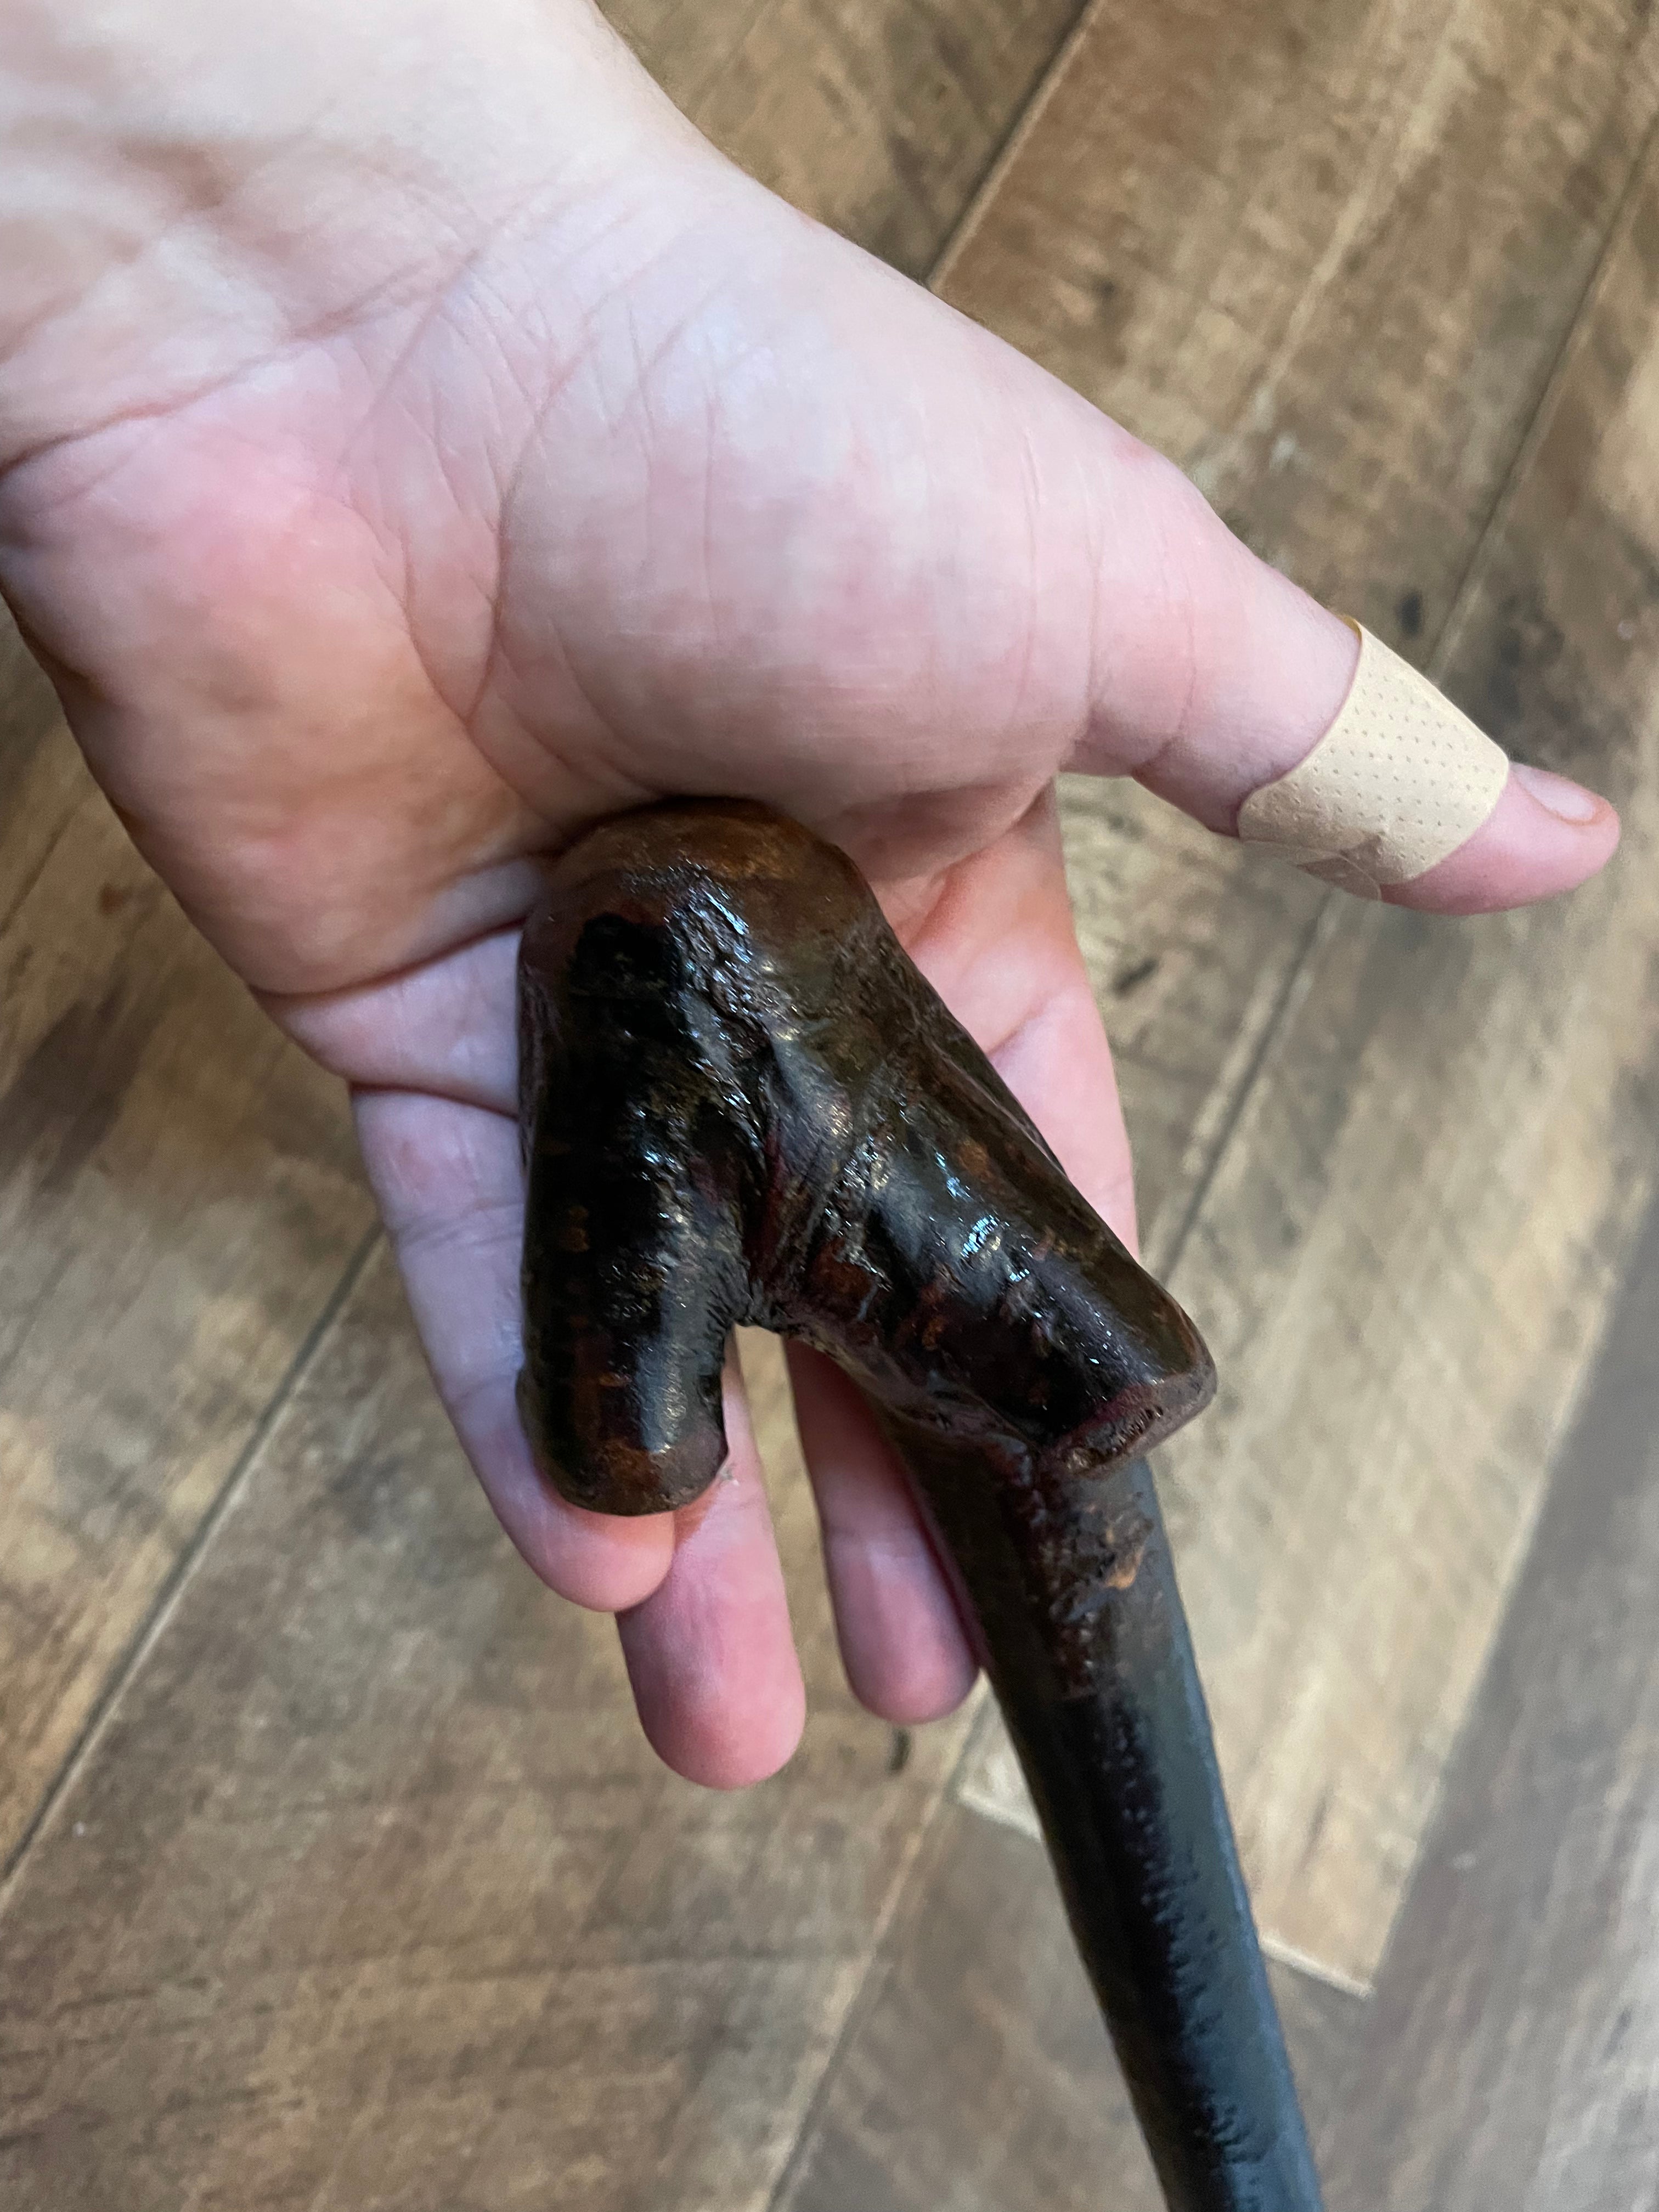 Blackthorn Walking Stick 36 1/2 inch- Handmade in Ireland